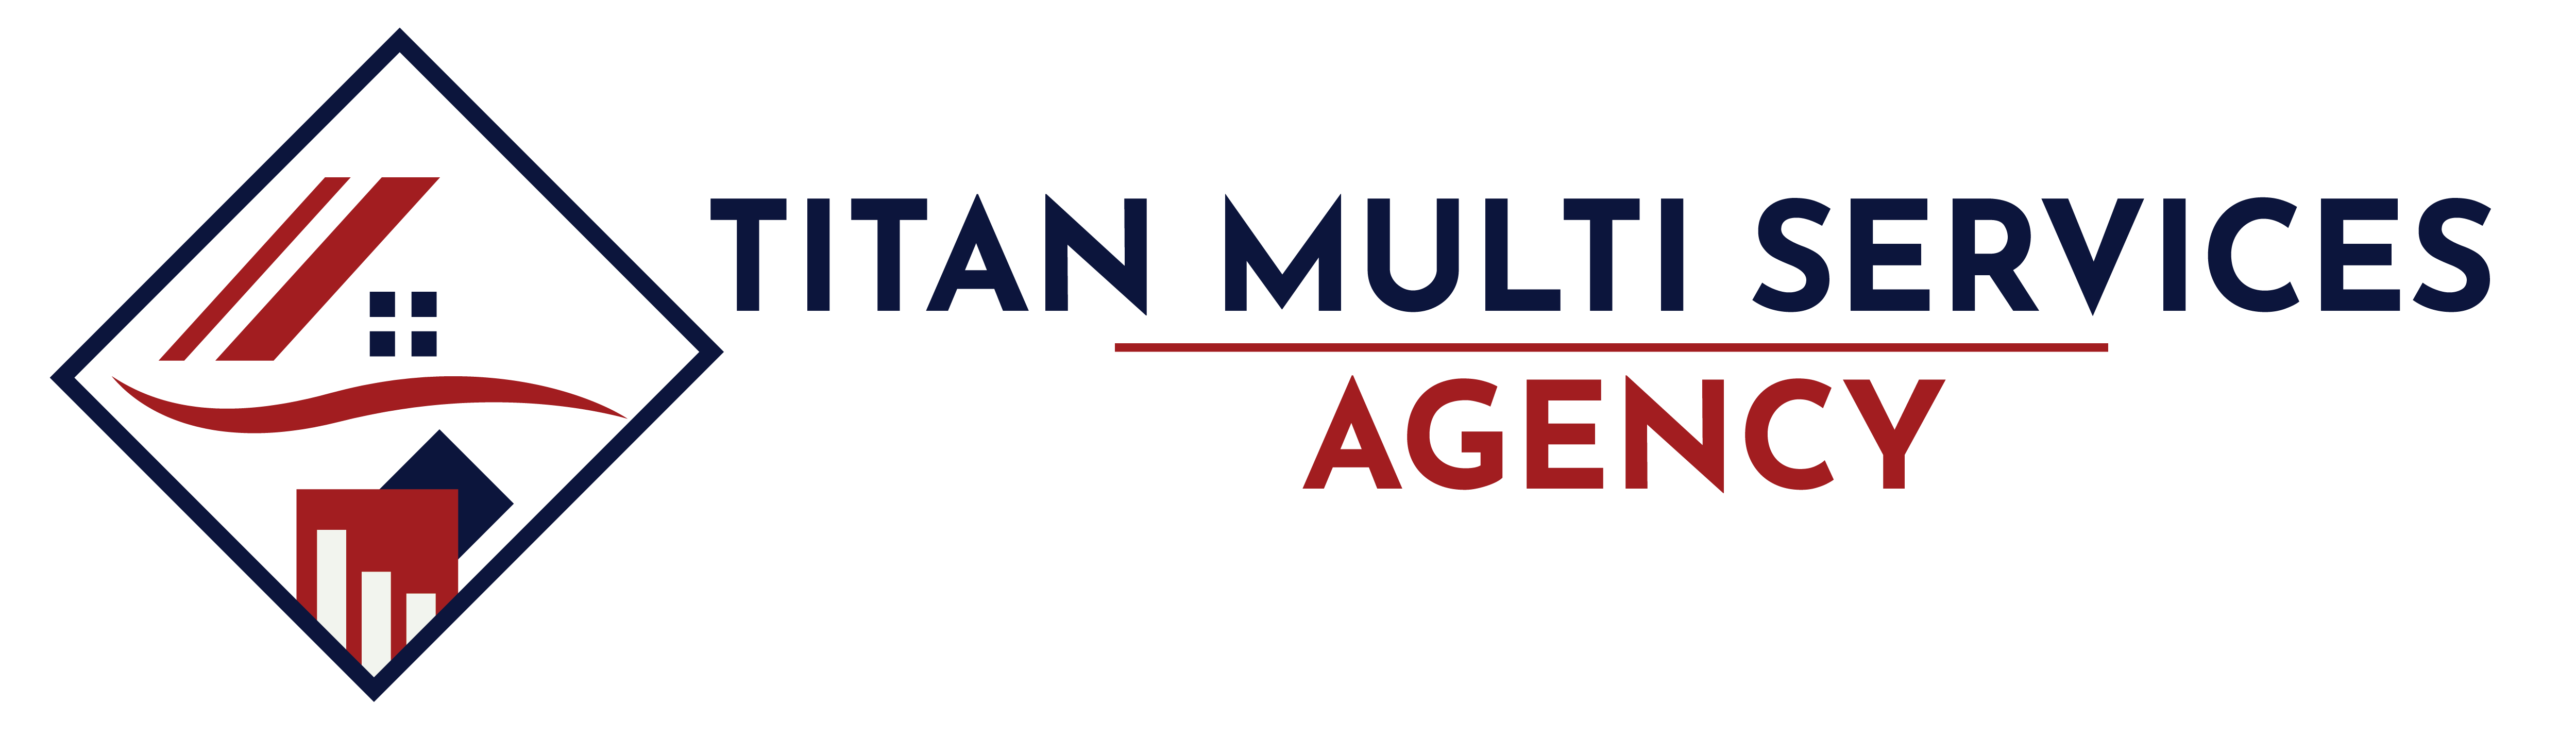 Titan Multi Services Agency